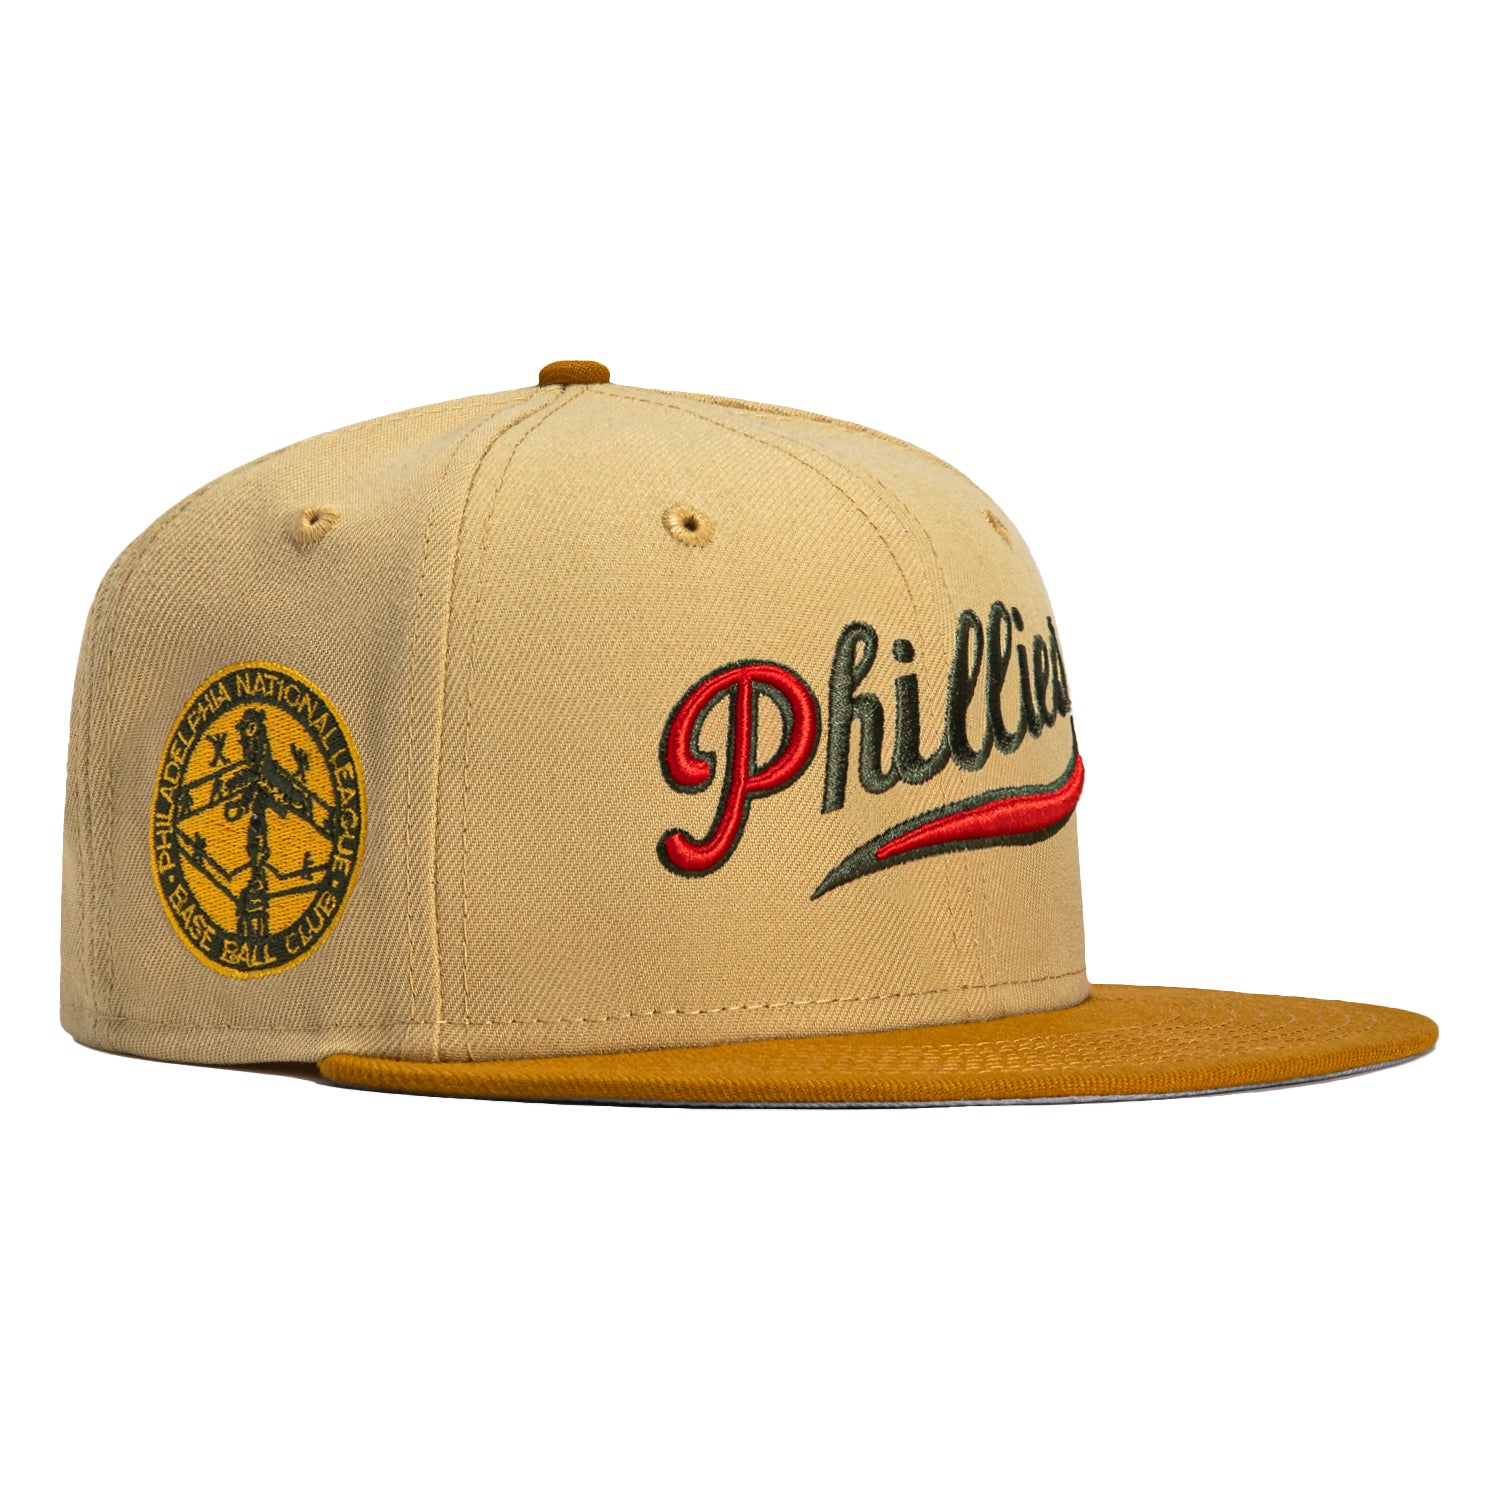 New Era 59FIFTY Hummus Philadelphia Phillies 1938 Logo Patch Hat - Tan, Khaki Tan/Khaki / 8